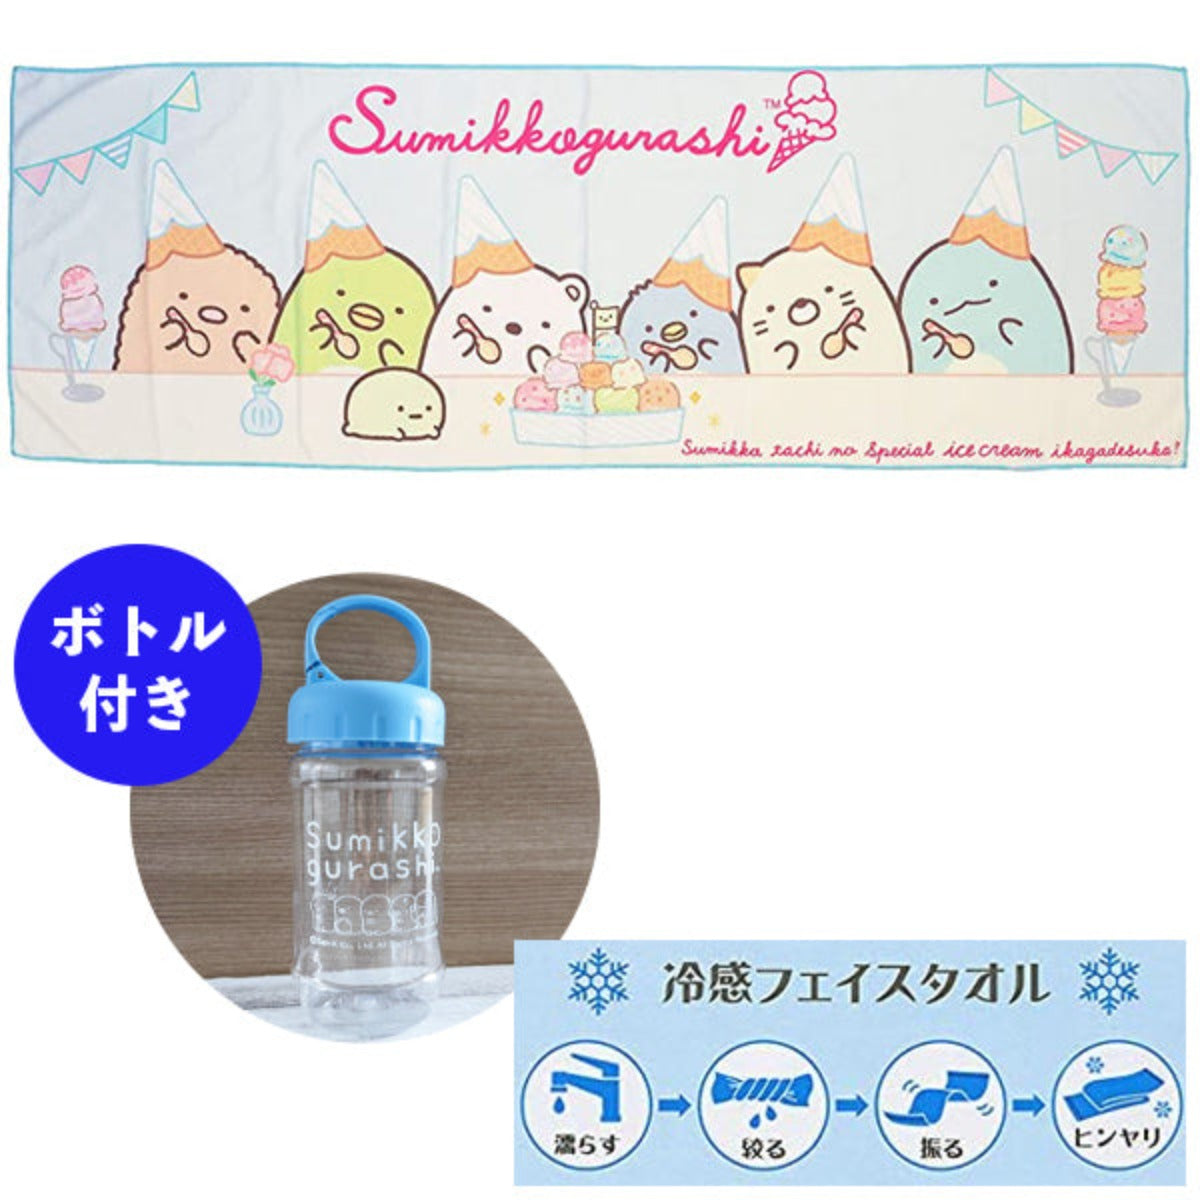 Cool Towel in Bottle - Sumikko Gurashi Blue B5